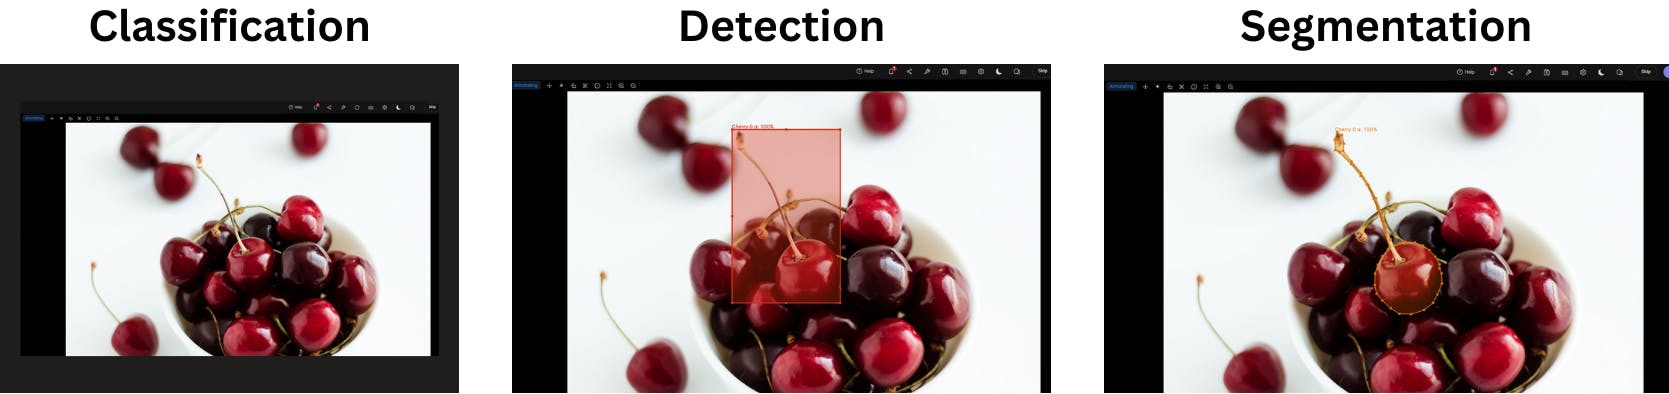 Object detection vs image classification vs image segmentation